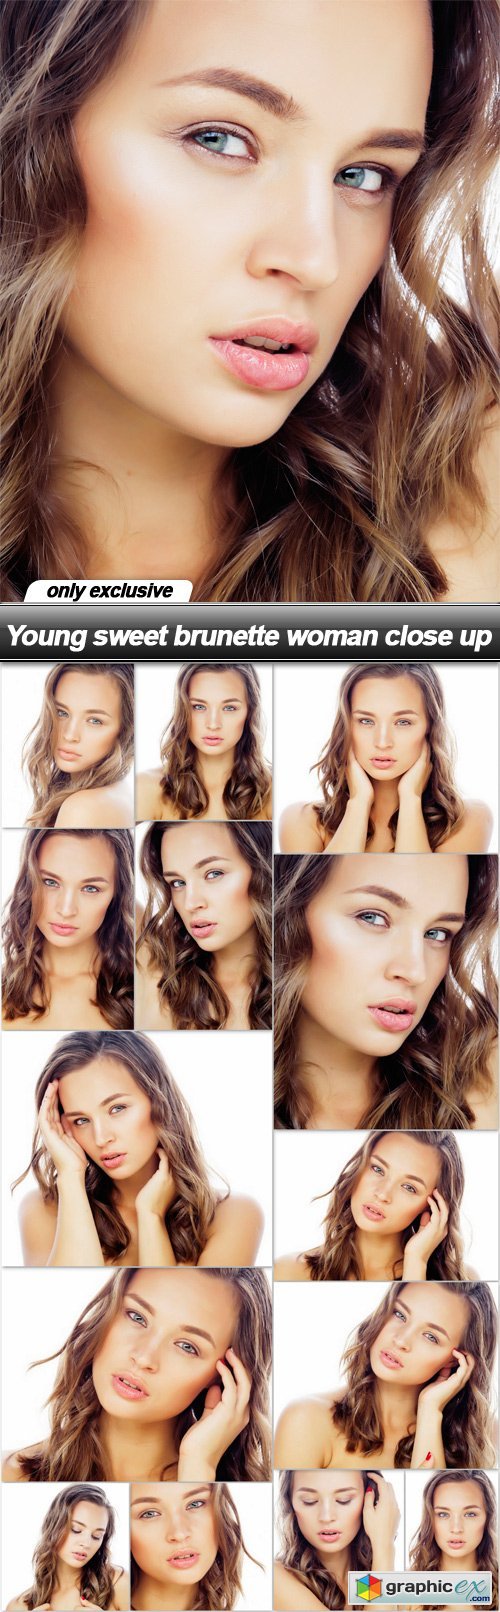 Young sweet brunette woman close up - 14 UHQ JPEG